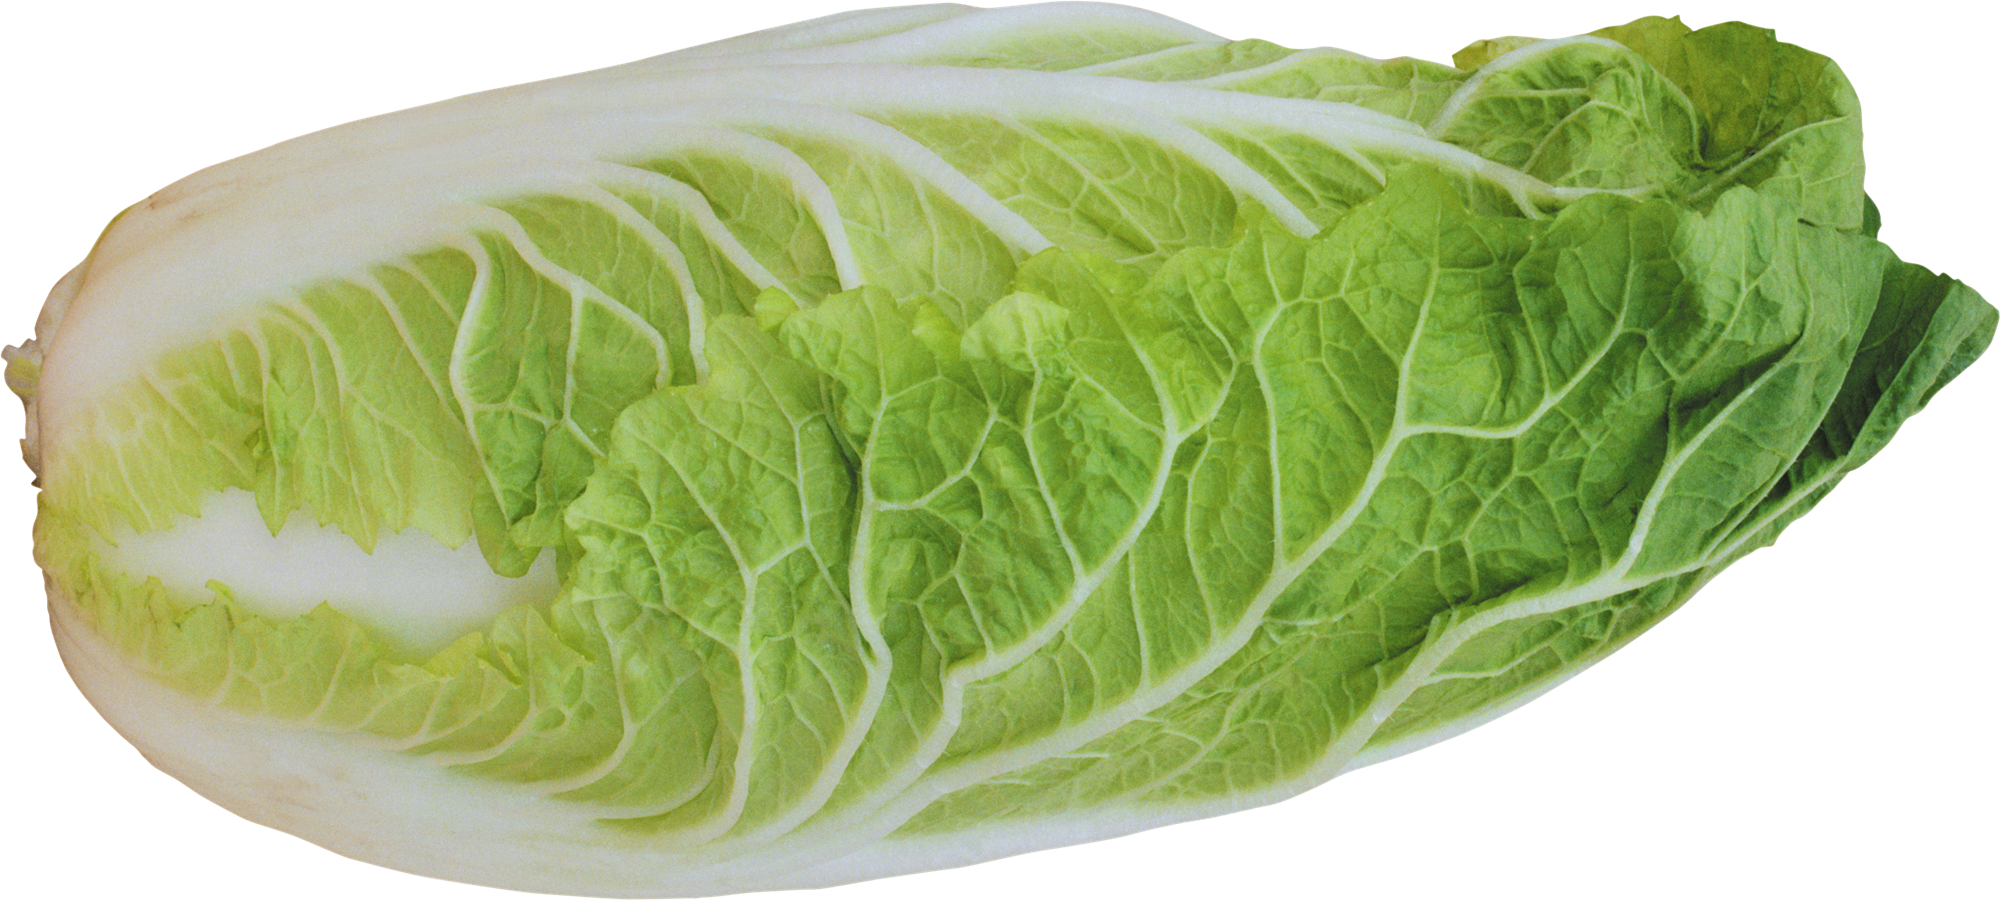 Cabbage Half Free Download Image PNG Image